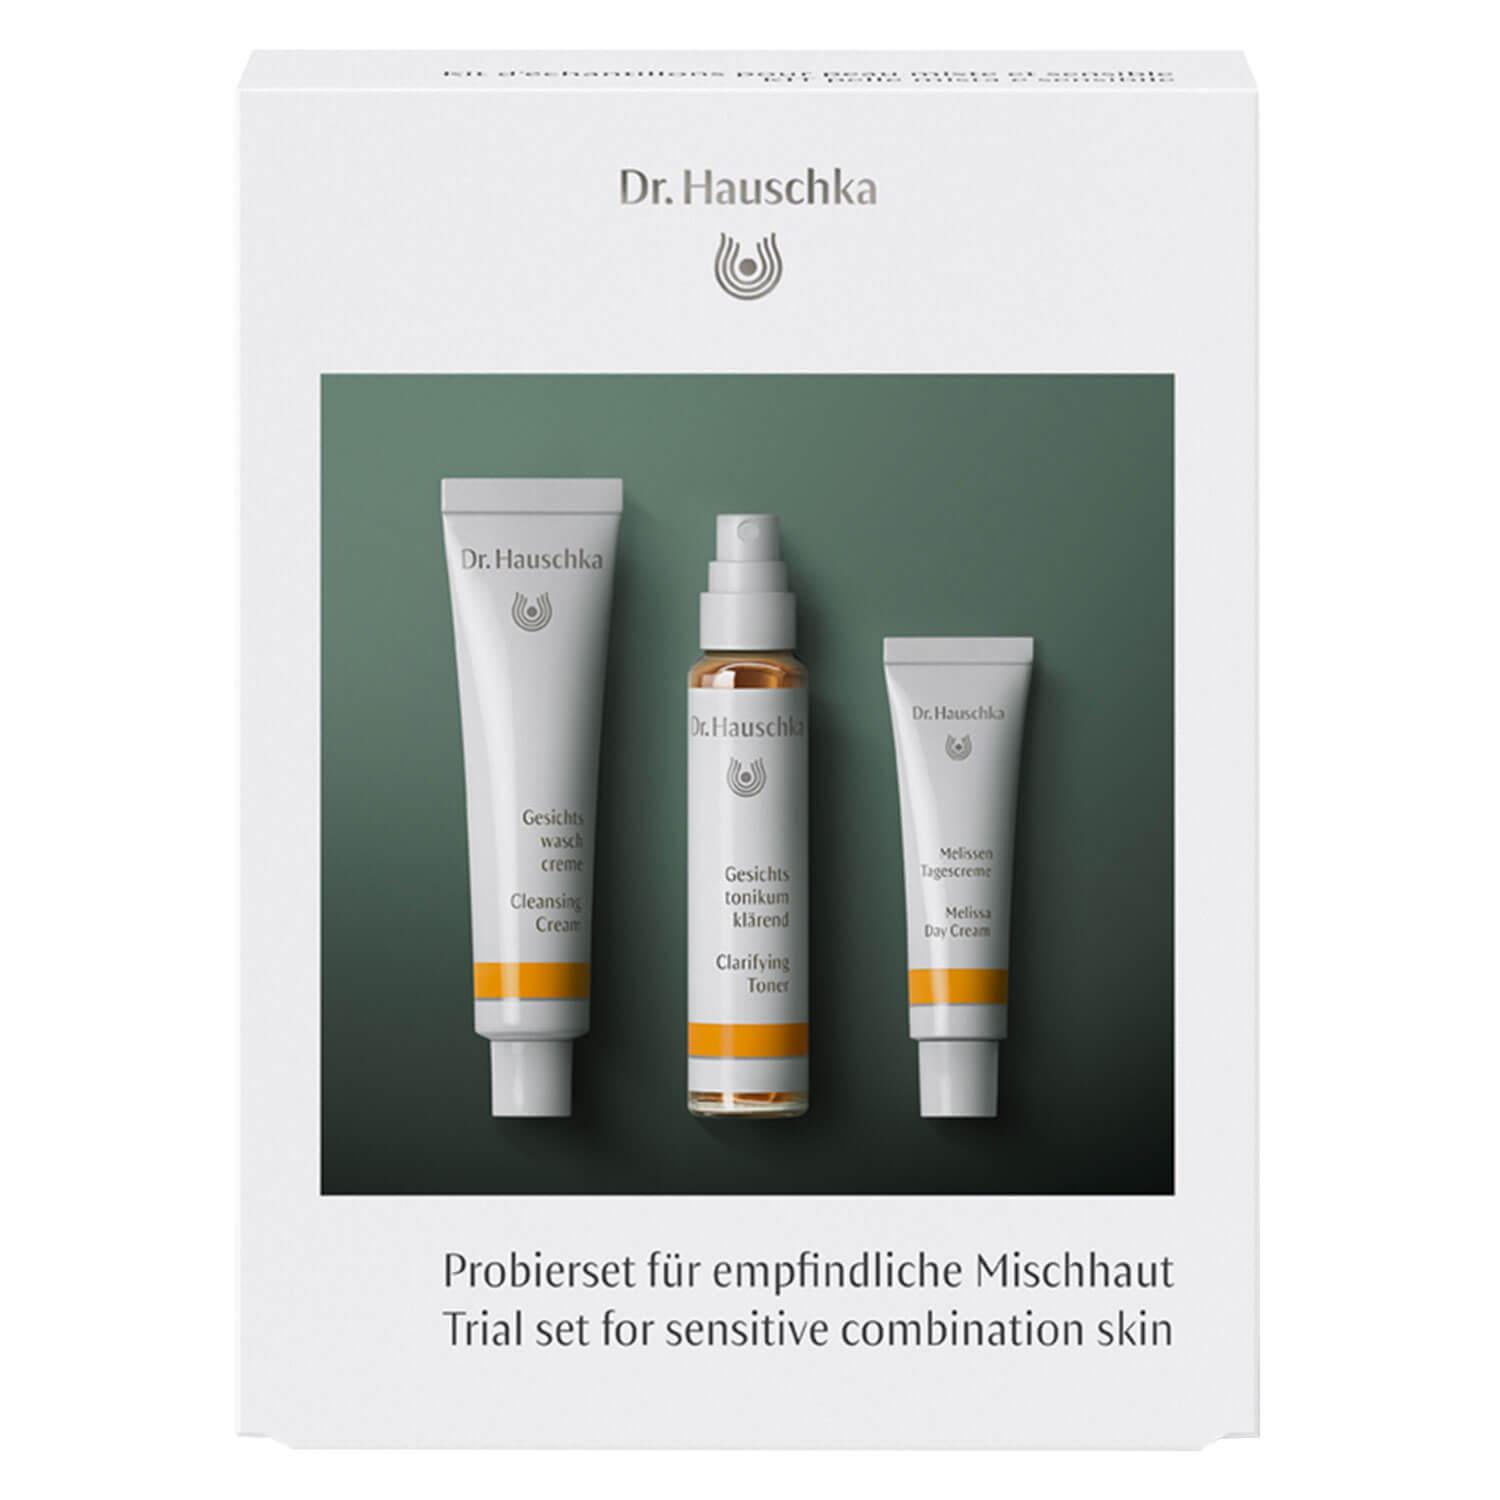 Dr. Hauschka - Trial Set for Sensitive Combination Skin